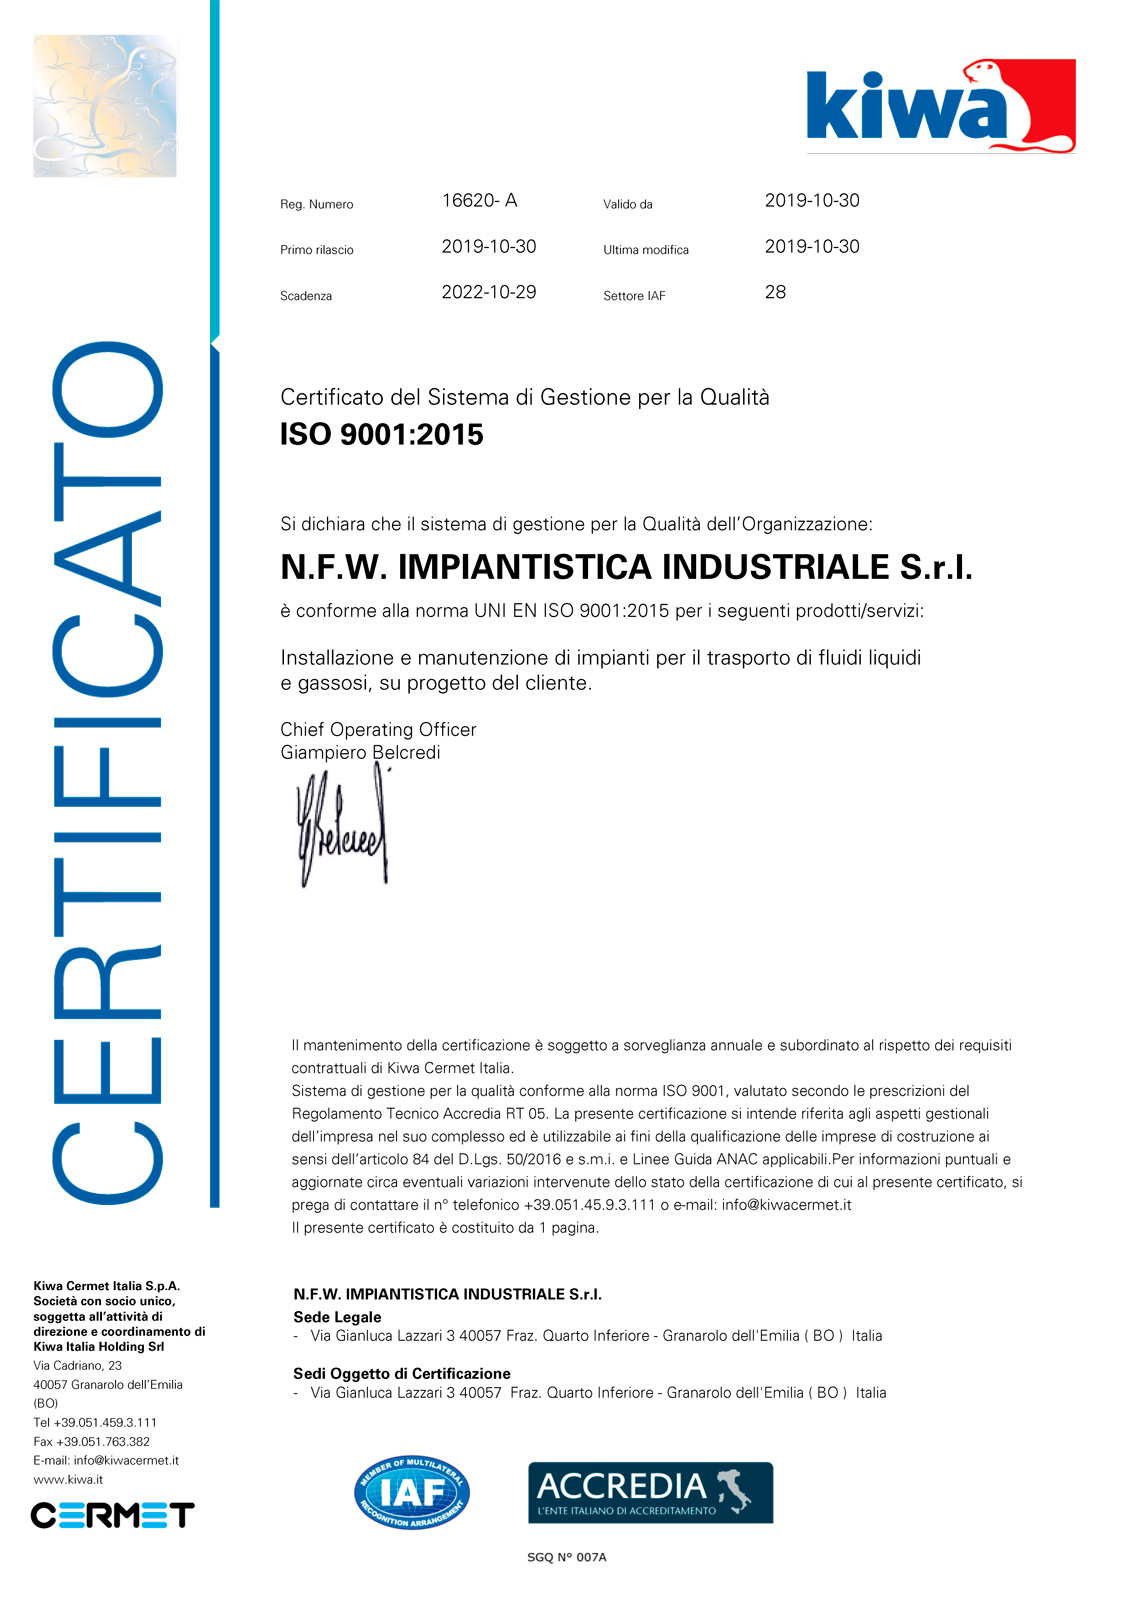 nfw-impianti-certificazione-ISO-9001-2015